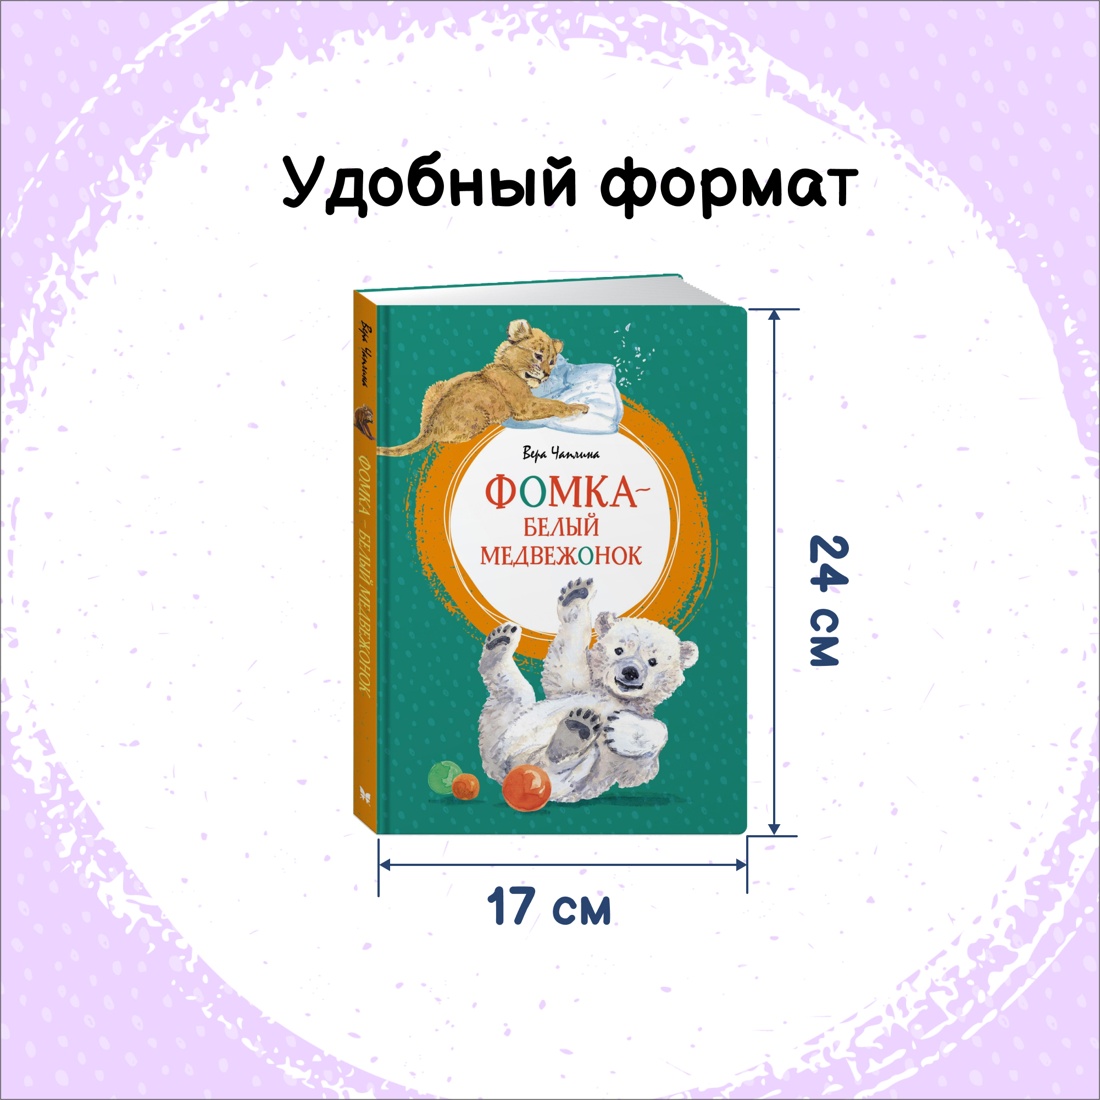 Промо материал к книге "Фомка - белый медвежонок" №1